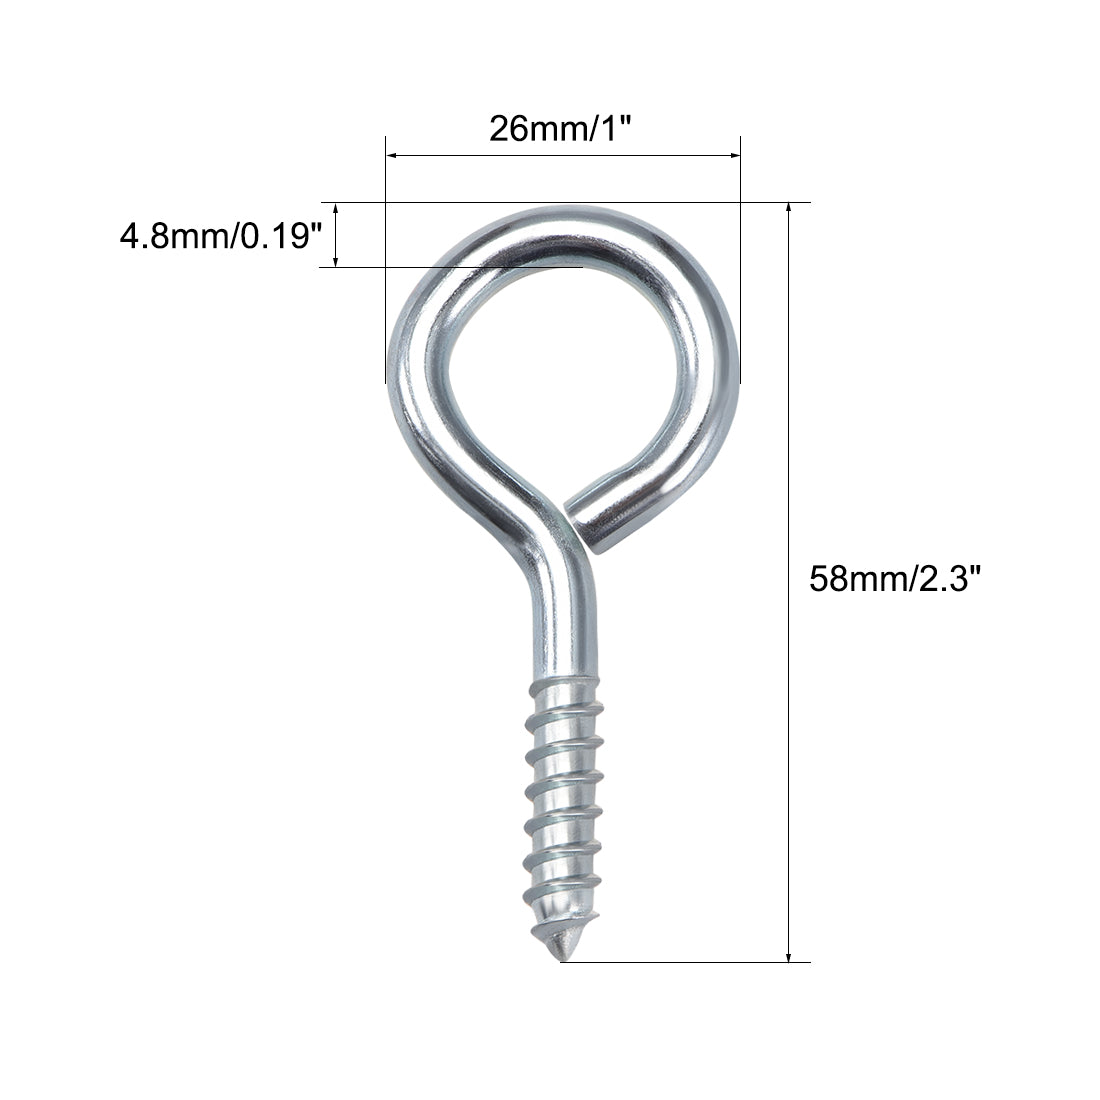 uxcell Uxcell 2.3" Screw Eye Hooks Self Tapping Screws Carbon Steel Screw-in Hanger Eye-Shape Ring Hooks 30pcs